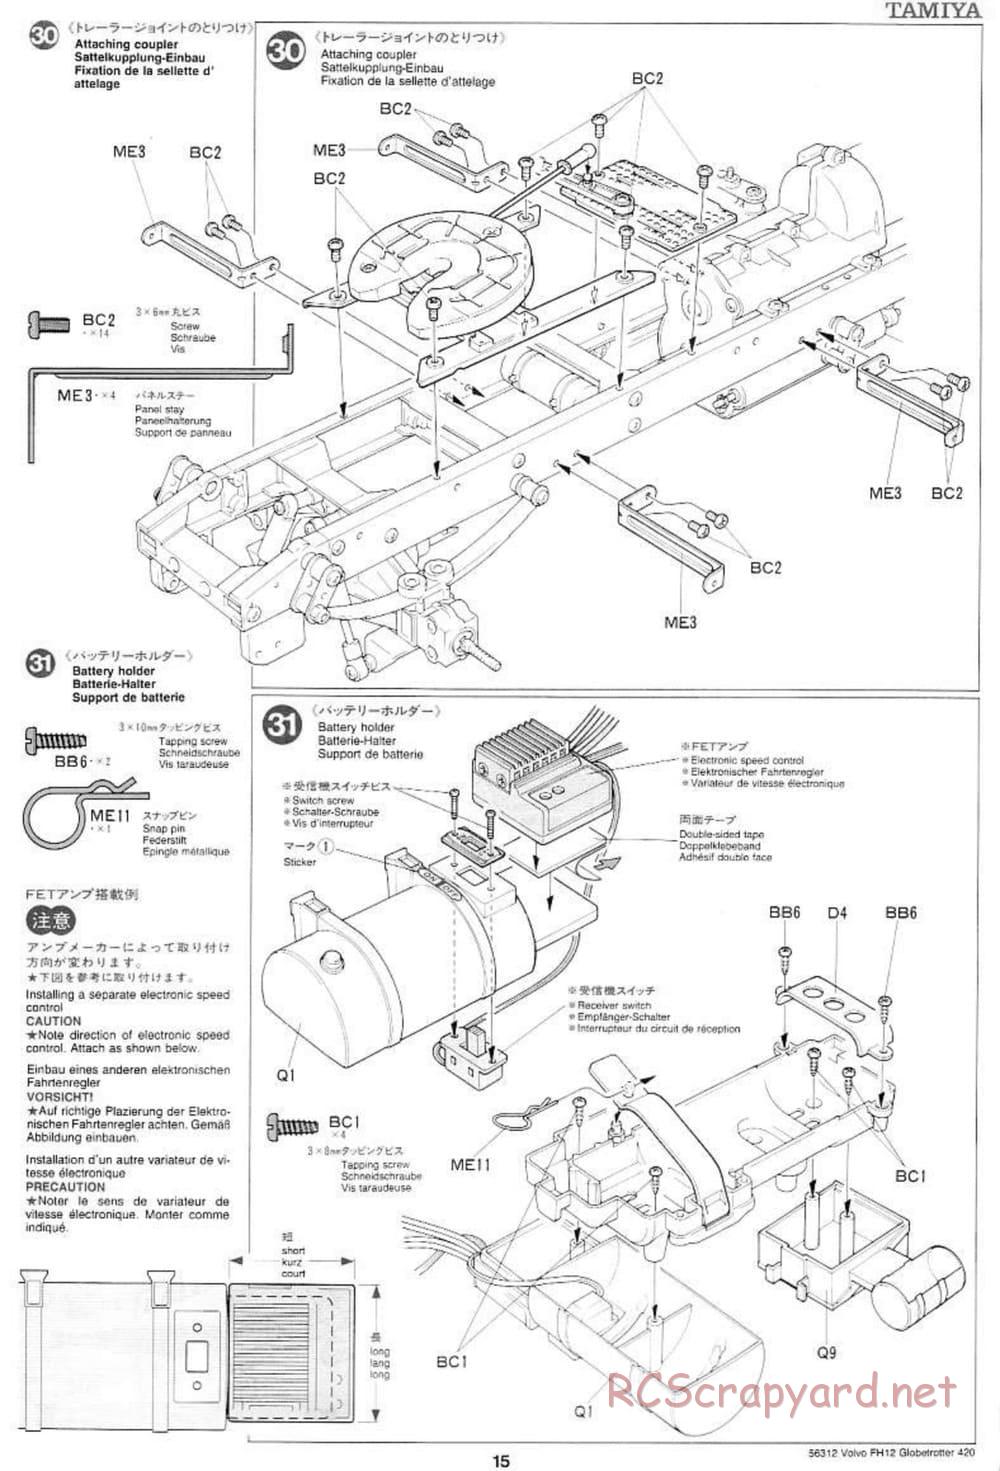 Tamiya - Volvo FH12 Globetrotter 420 - Manual - Page 15